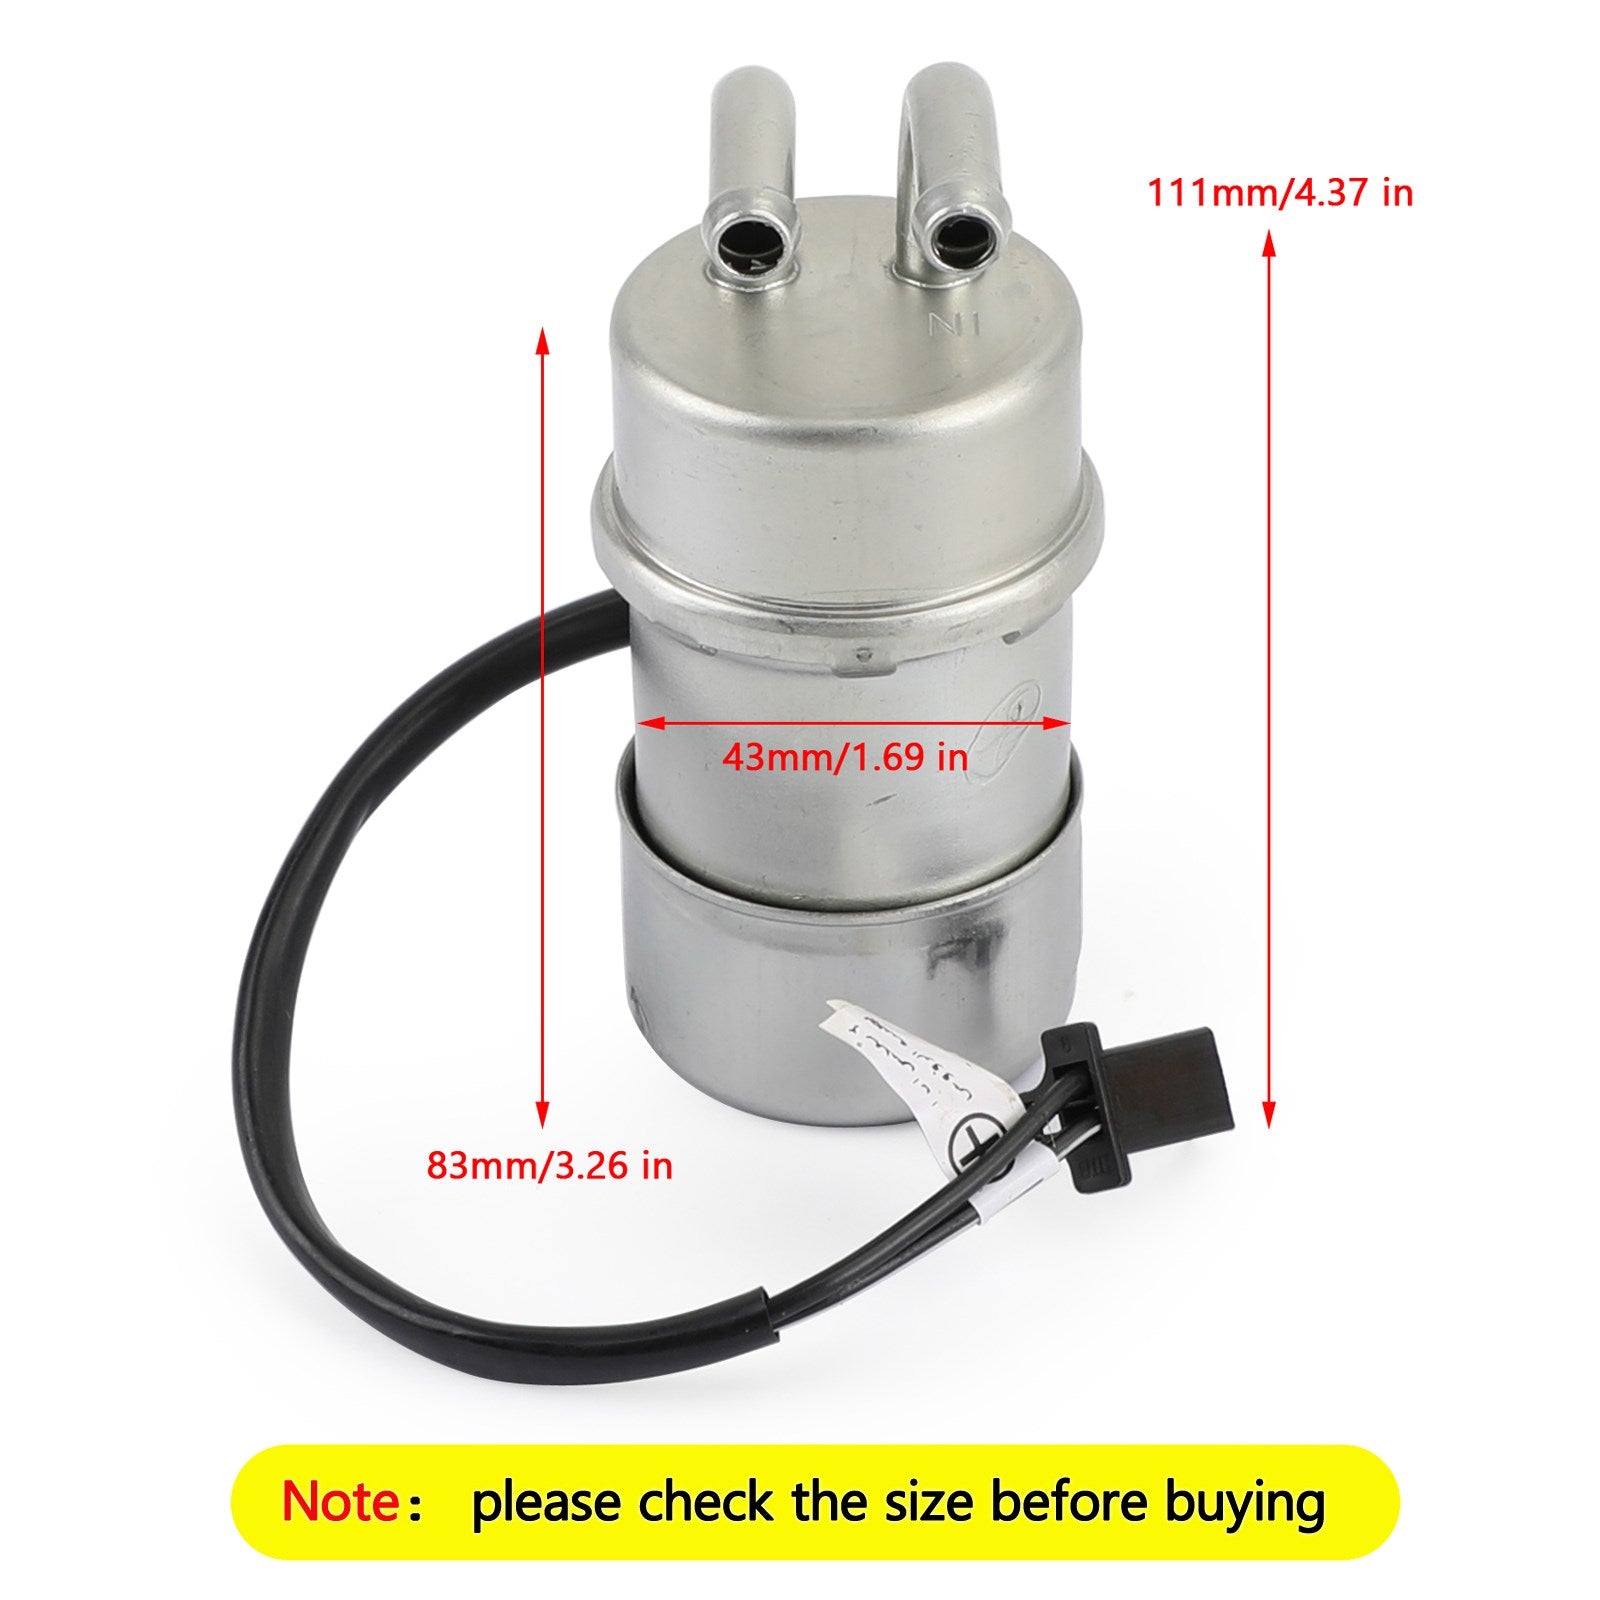 Pompe à essence compatible avec Suzuki Intruder 700 1400 VS1400 VS700 1985-2009 - Numéro de pièce 15100-38A00